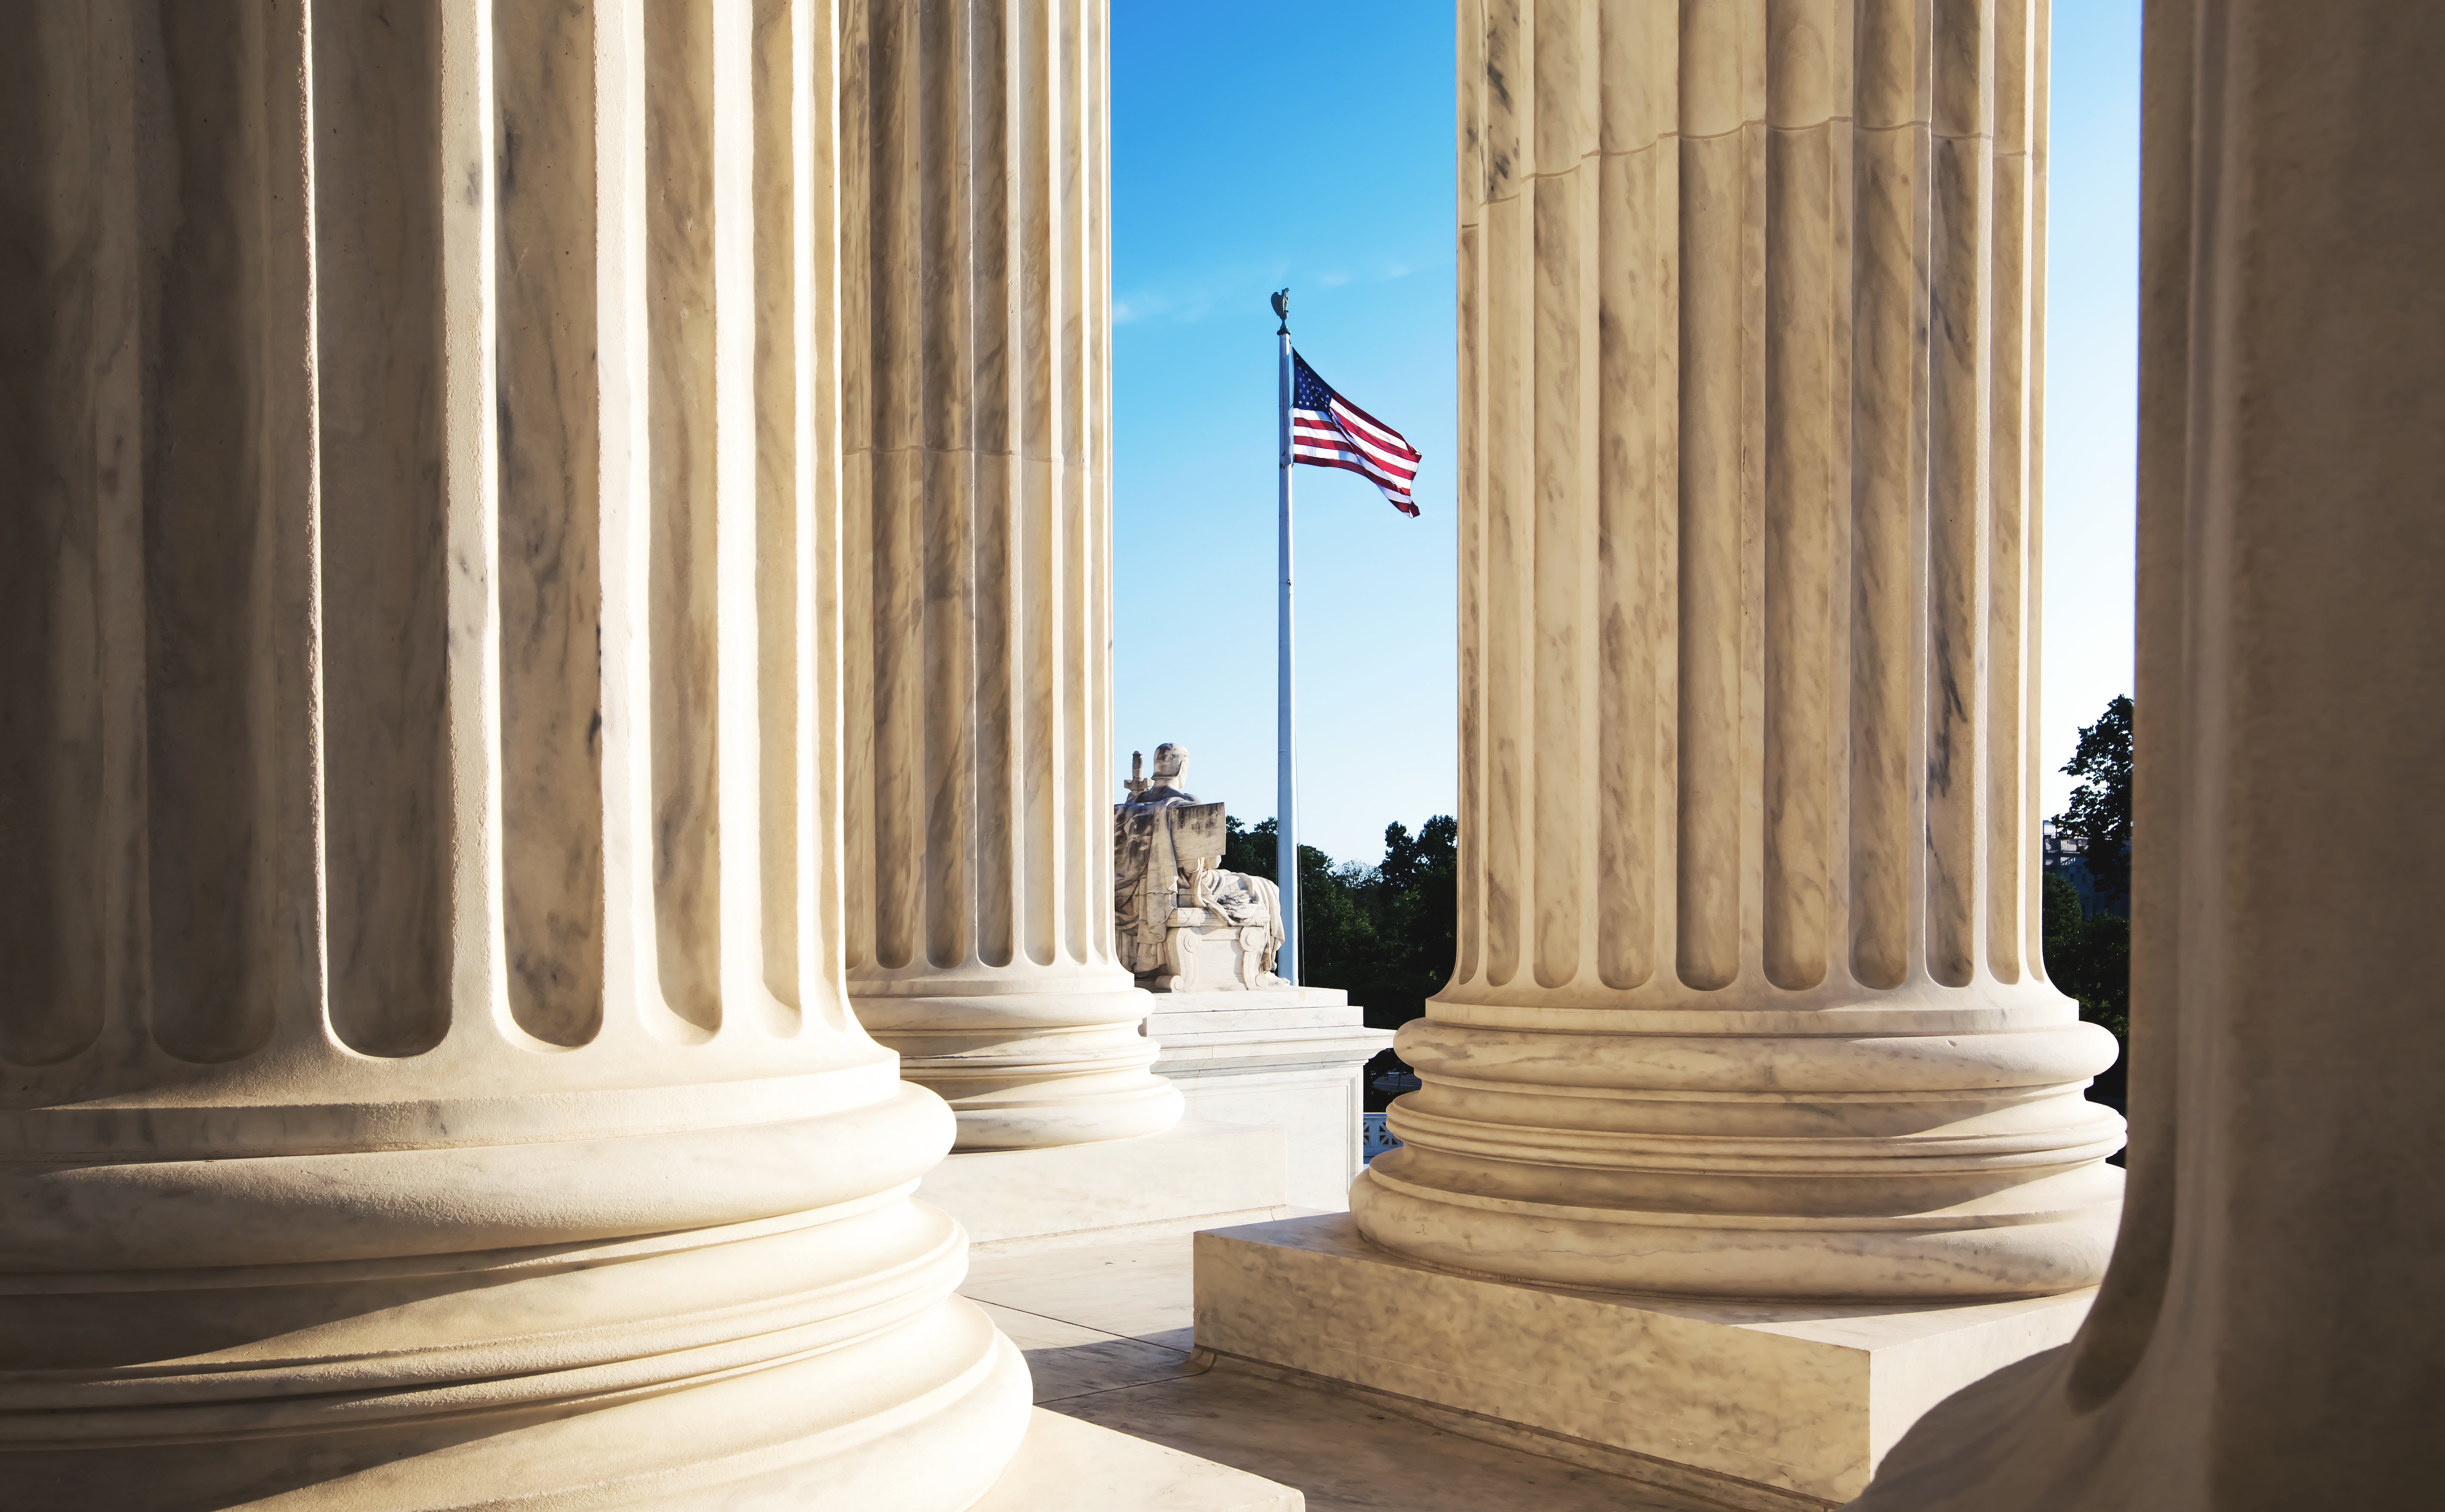 US Supreme Court exterior columns and flag